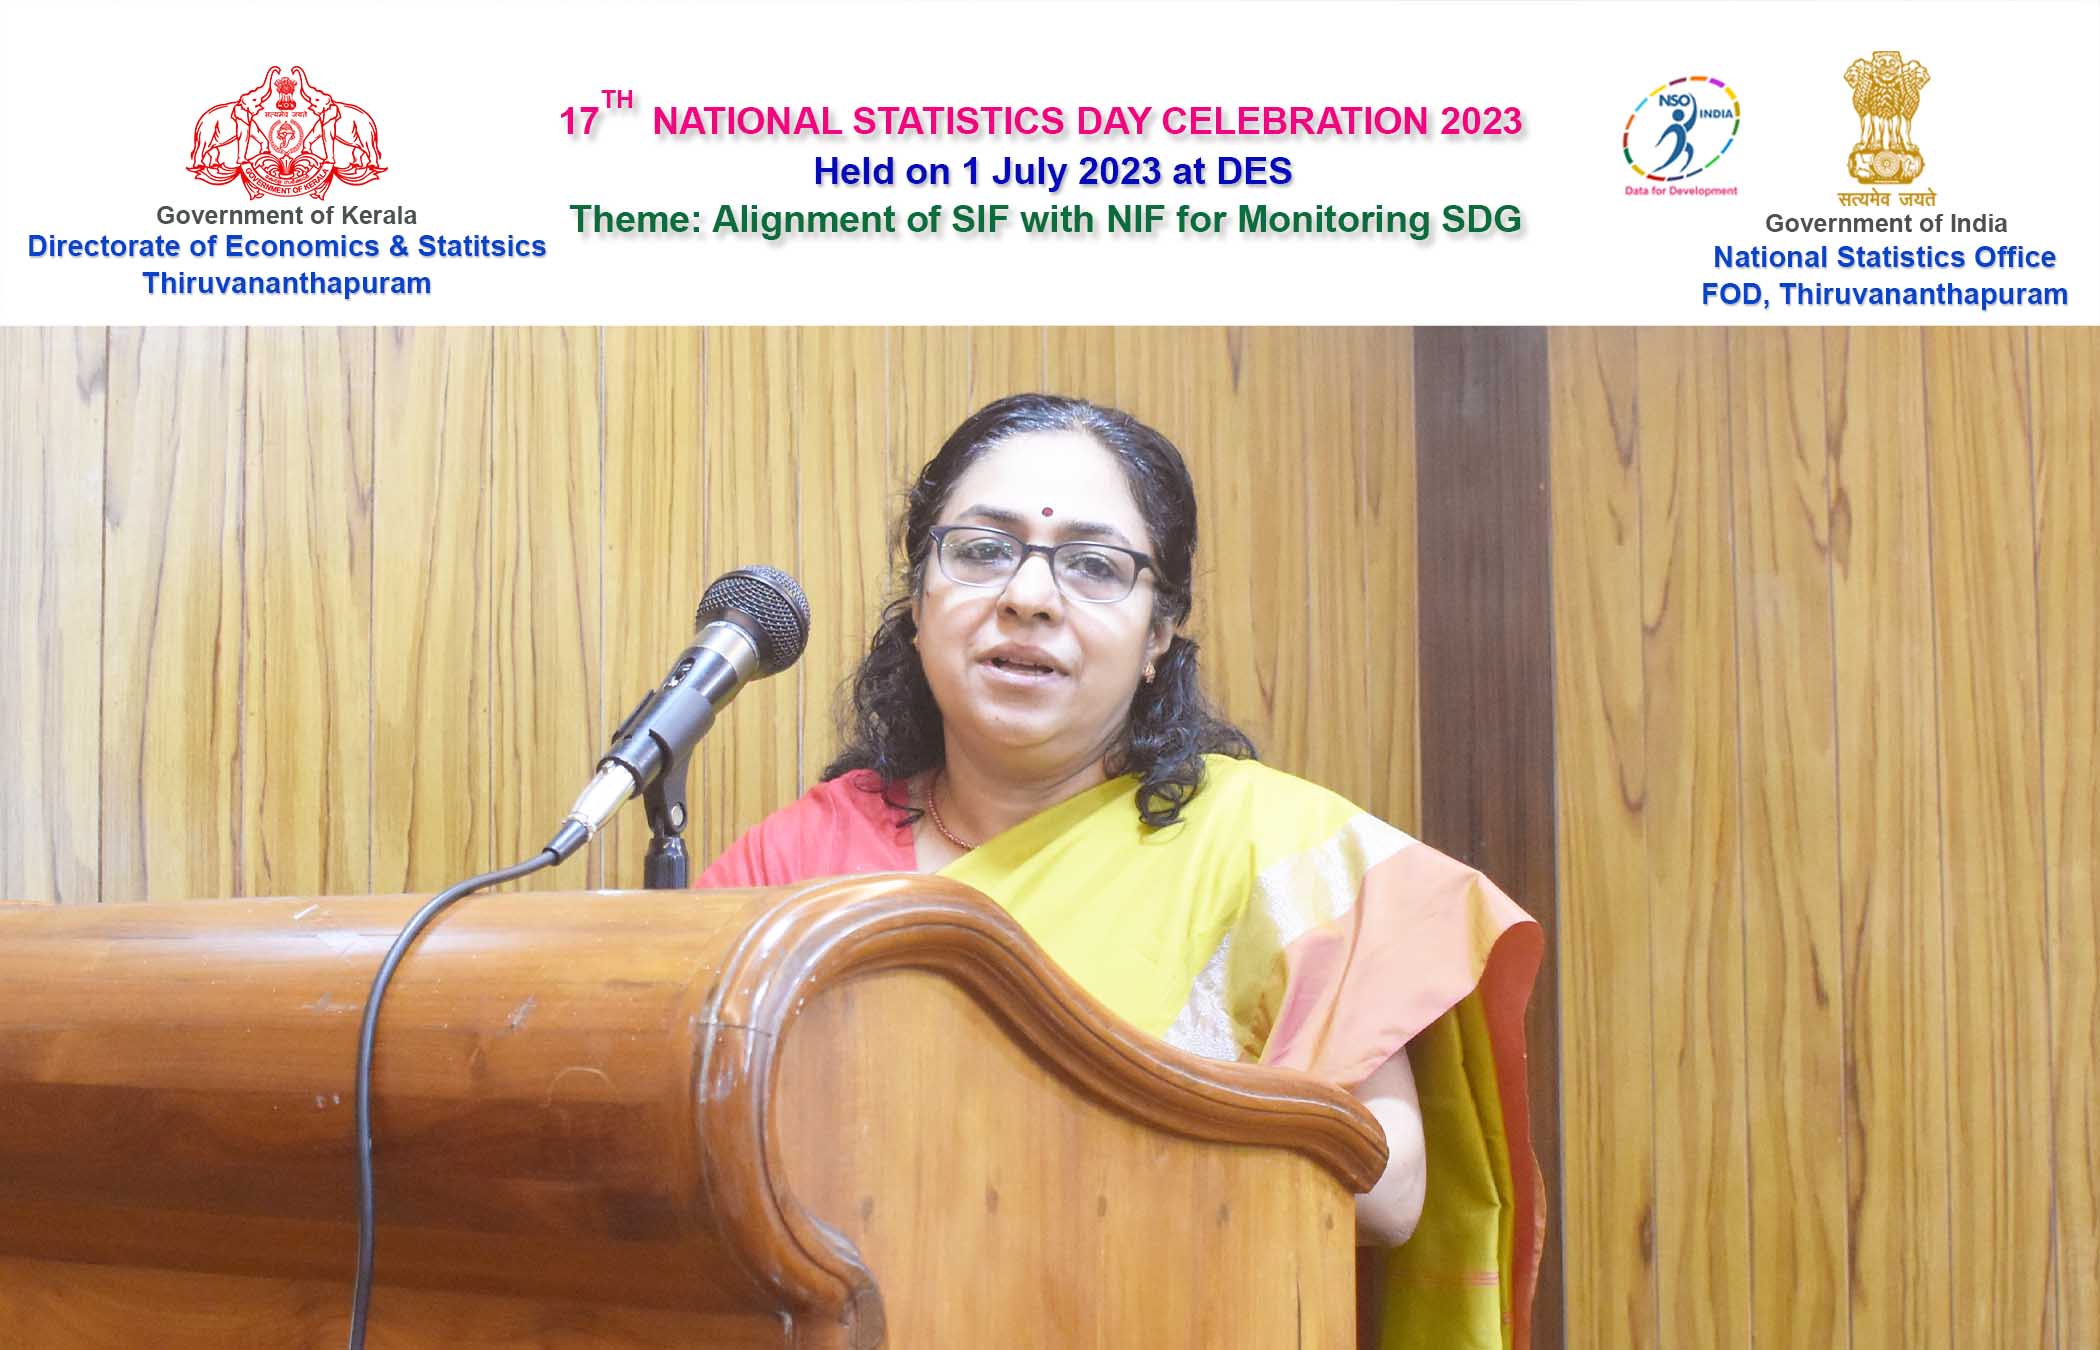 Key note address by Smt. Sunitha Bhaskar, DDG NSO FOD during the 17th Statistics Day Celebration in DES held on 1-7-2023